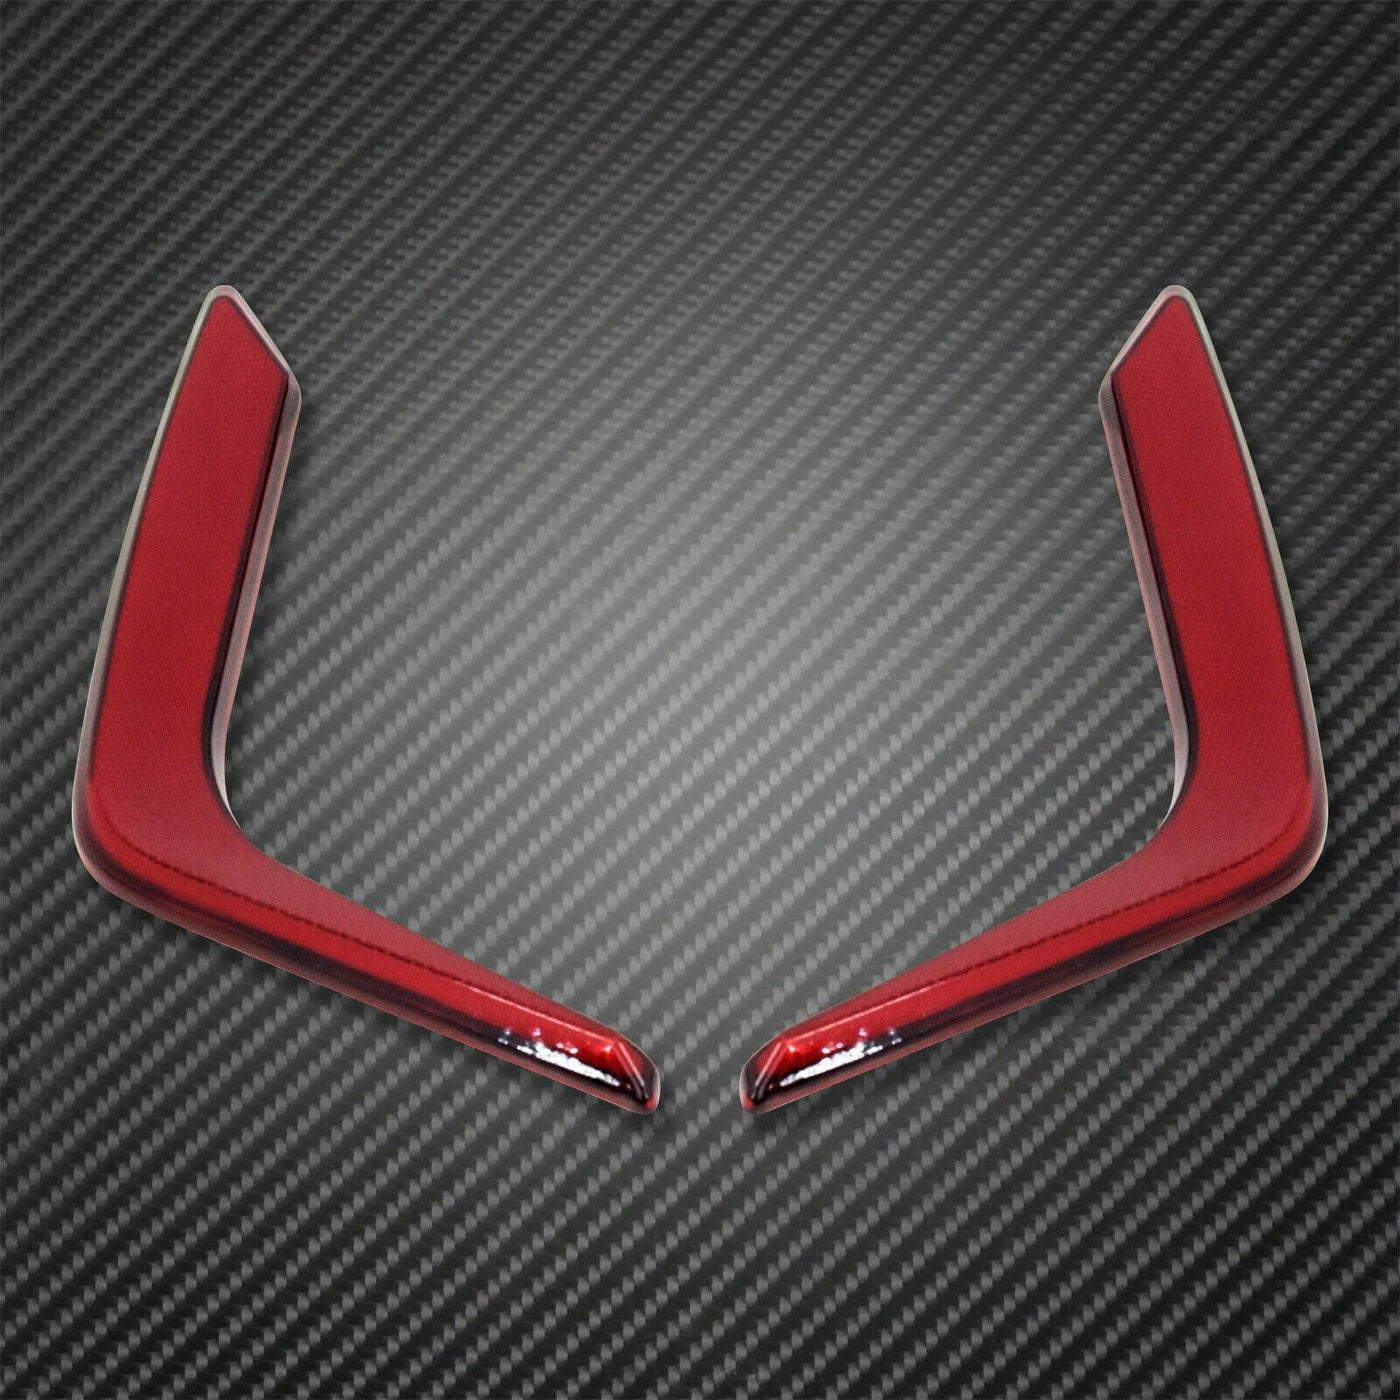 LED. Rear Saddlebag Accents Light Run Brake Turn Signal Fit For Honda Goldwing - Moto Life Products